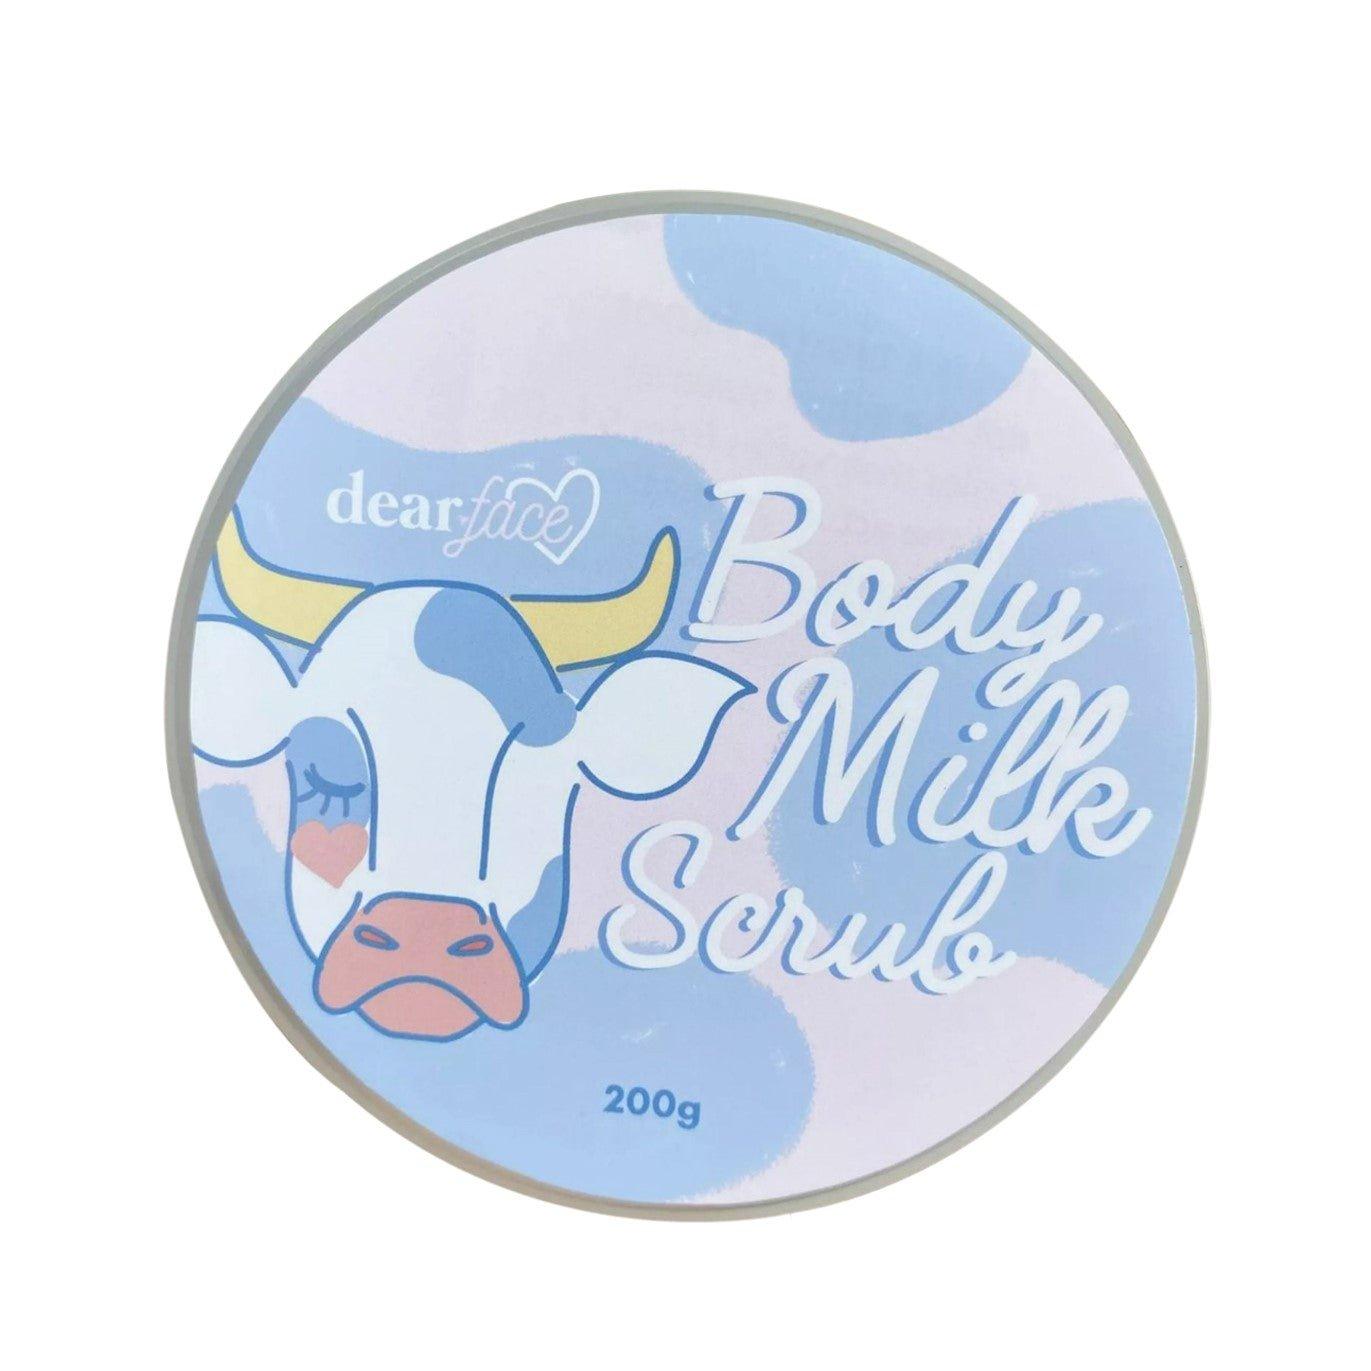 Dear Face Body Milk Scrub (200g)| Brightening & Moisturizing in United Arab Emirates- bluelily.me